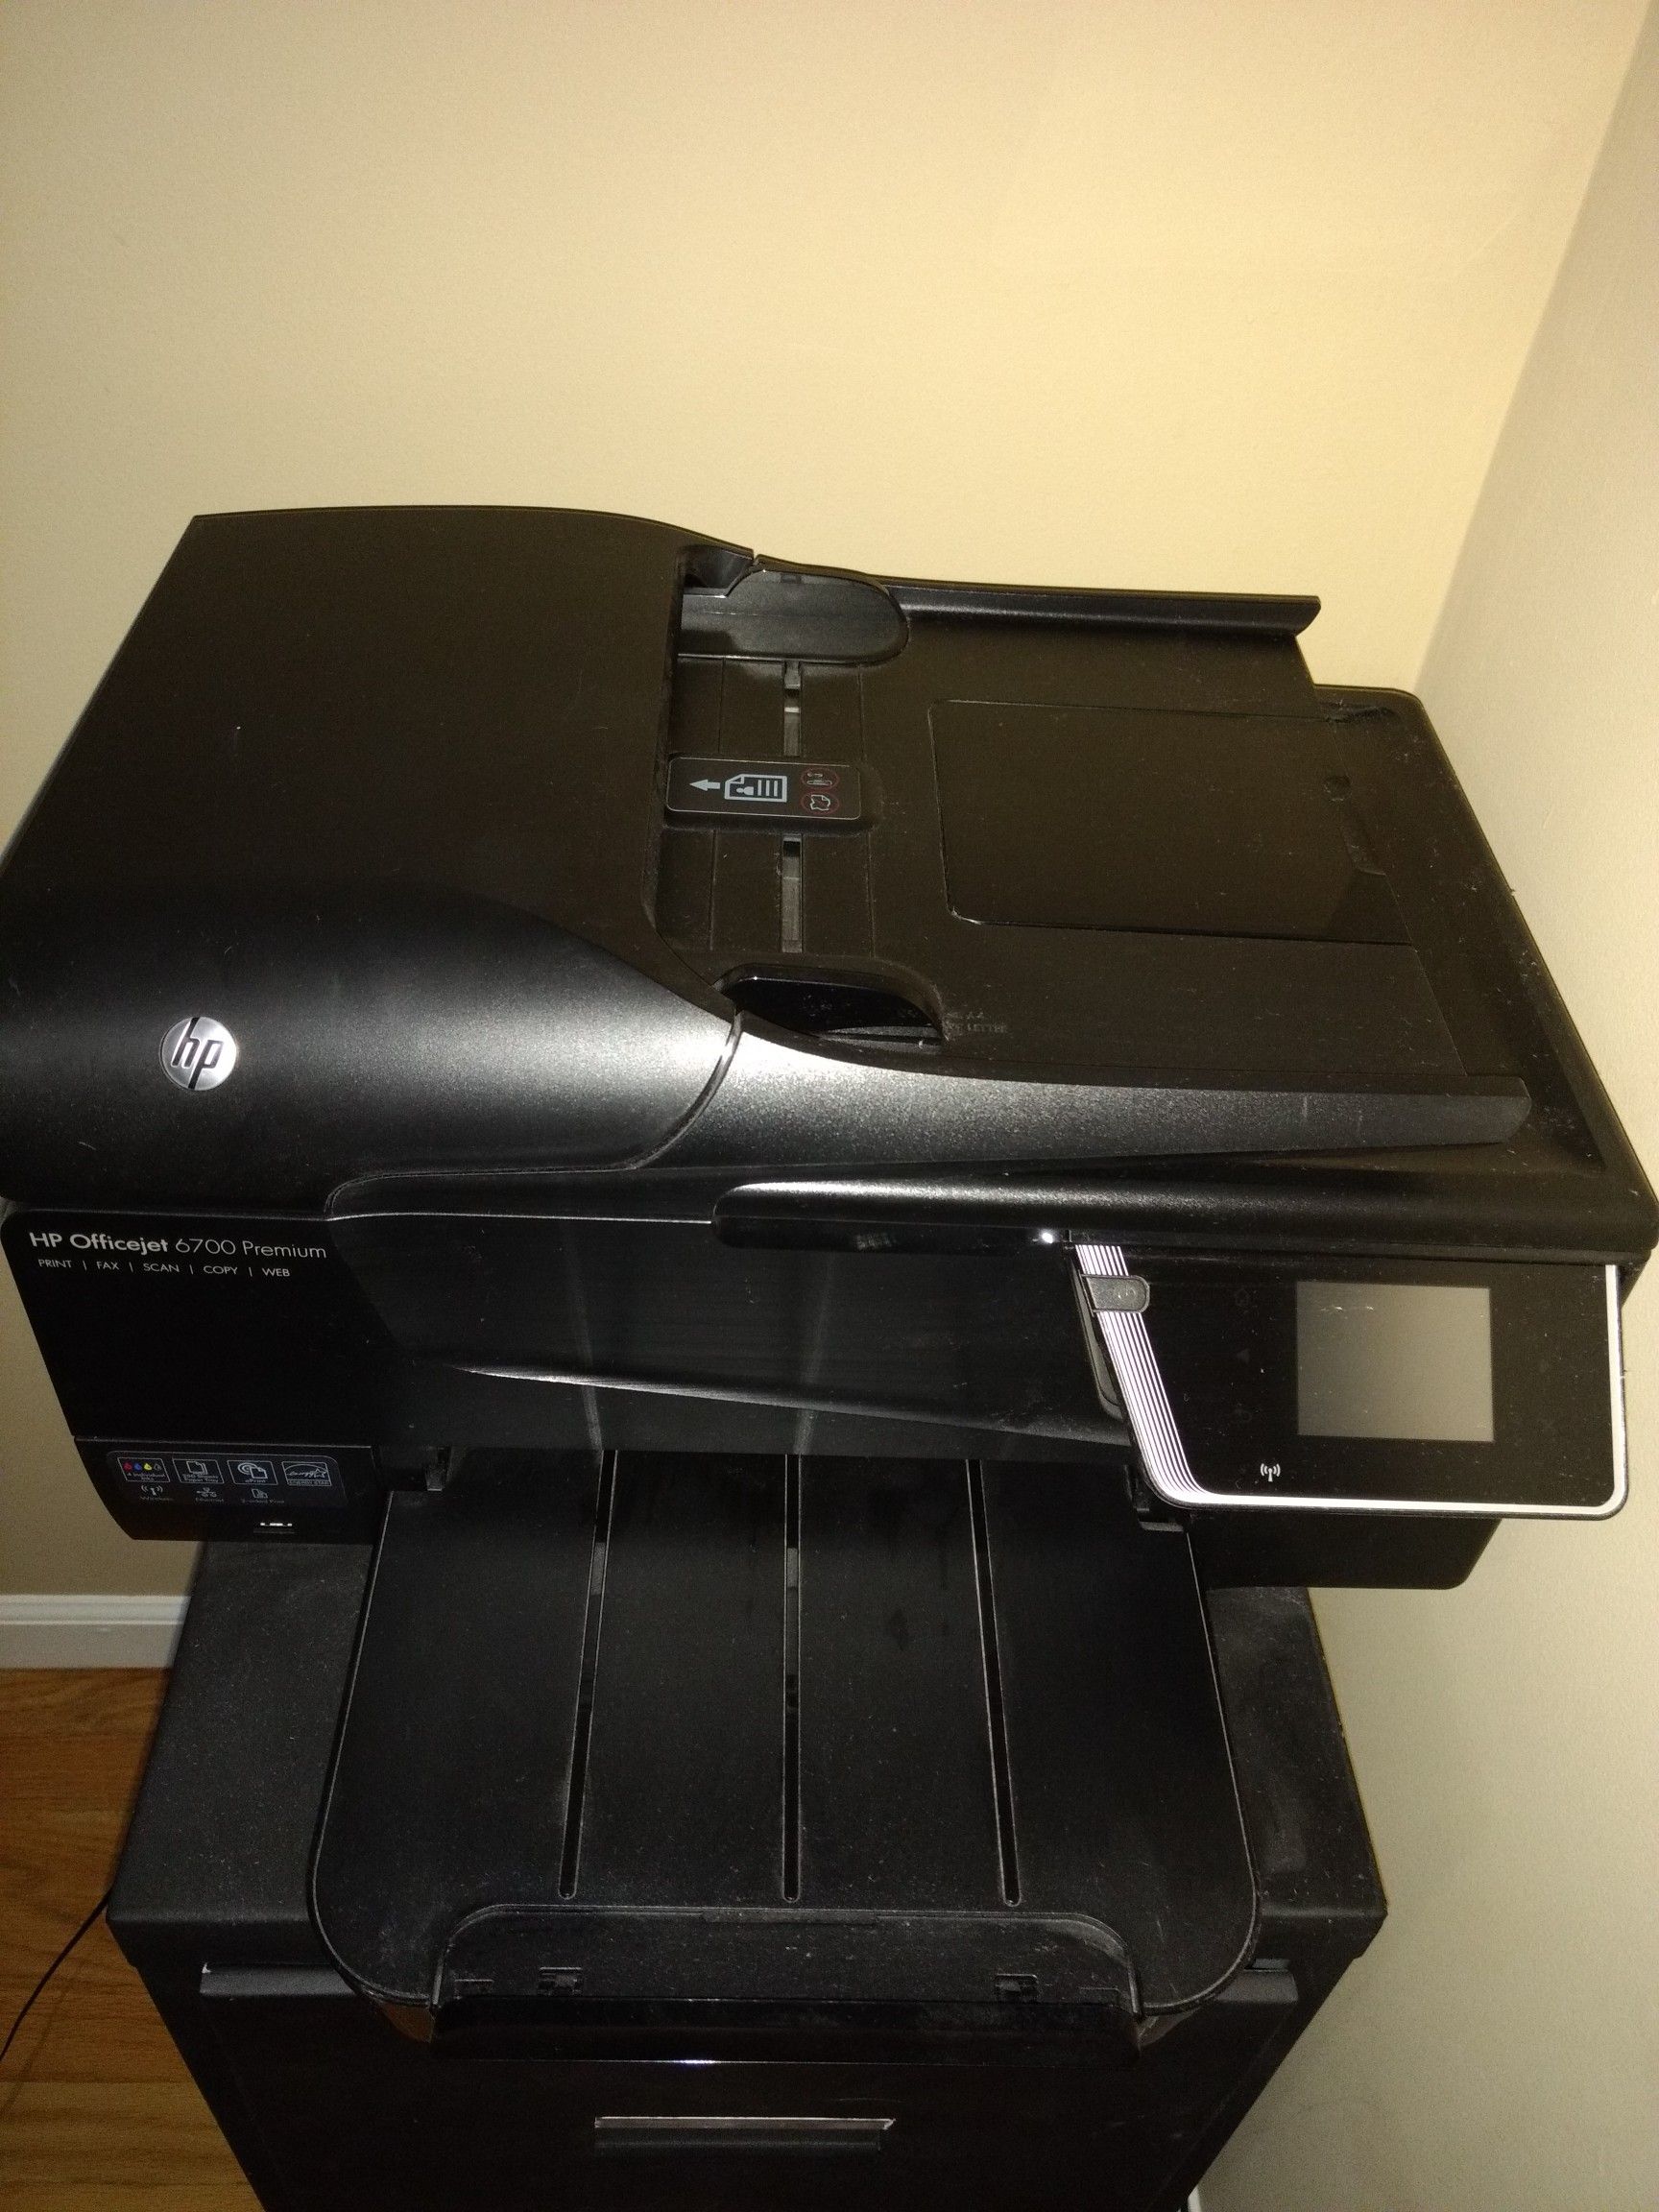 HP Officejet printer, copier, fax, scanner